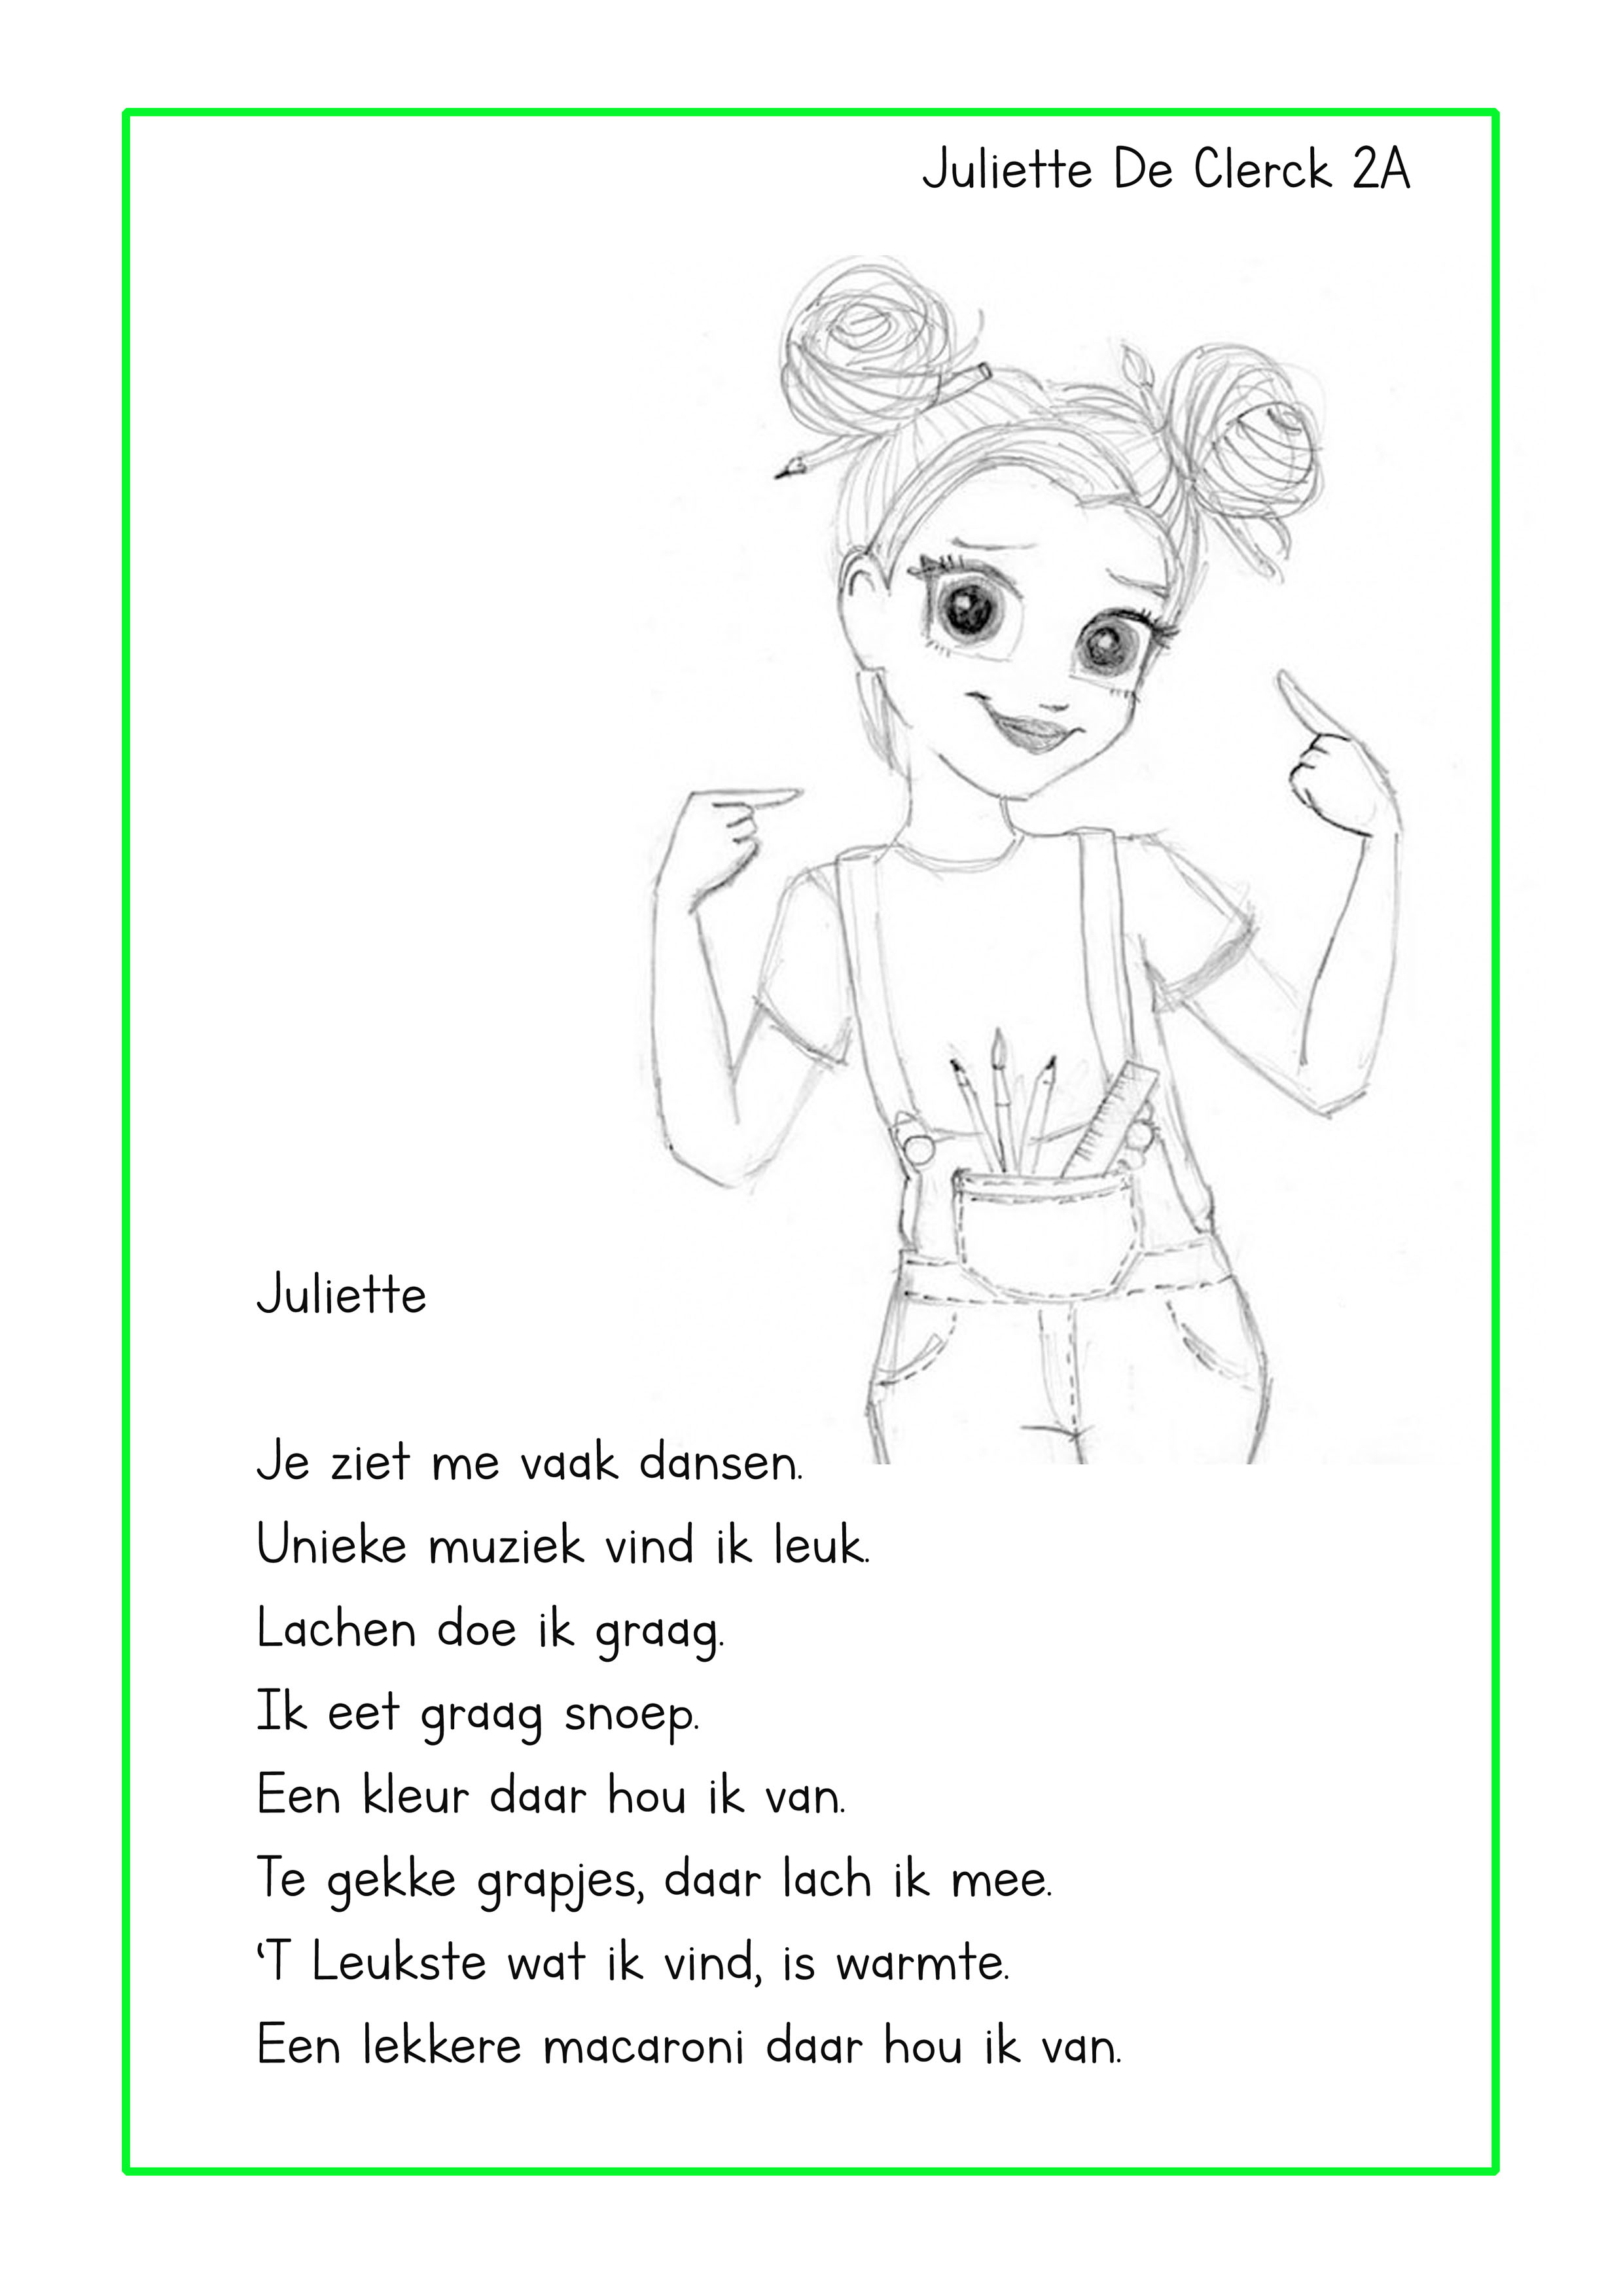 juliette-De-Clerck-2A-A4